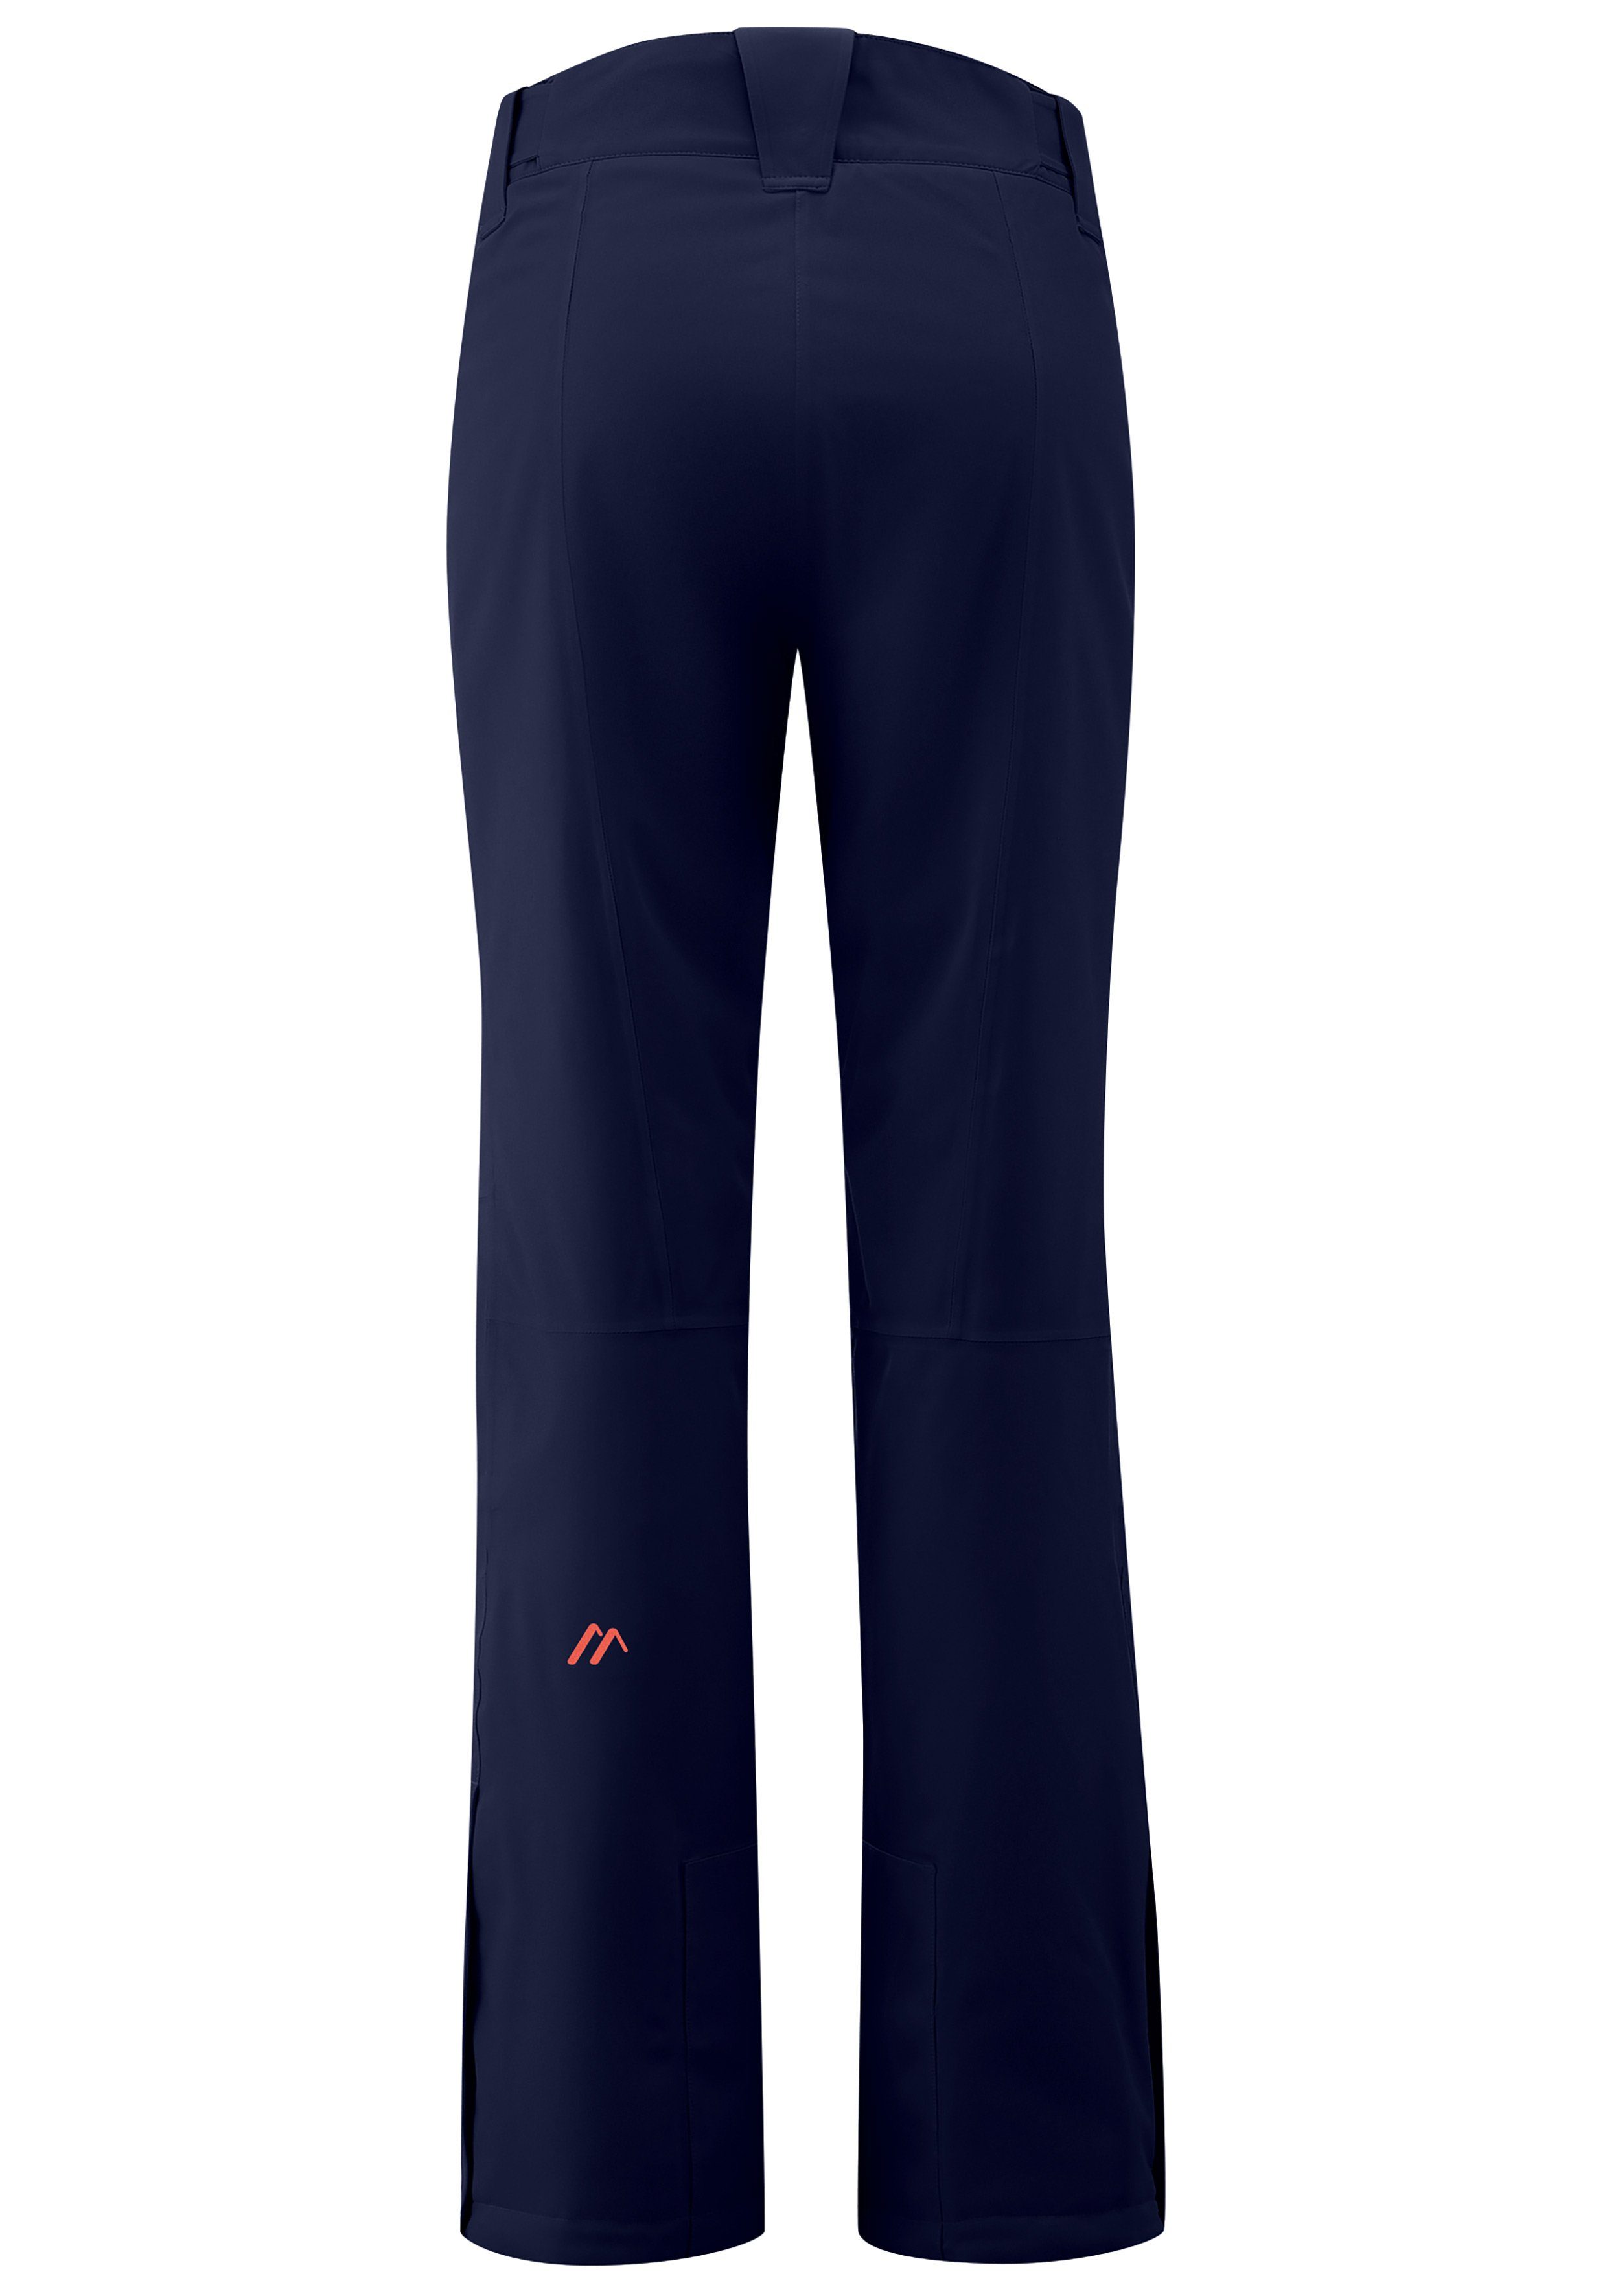 Maier dunkelblau Skihose Pants Skihose Sports Silhouette schlanker in sportliche Feminin, Coral